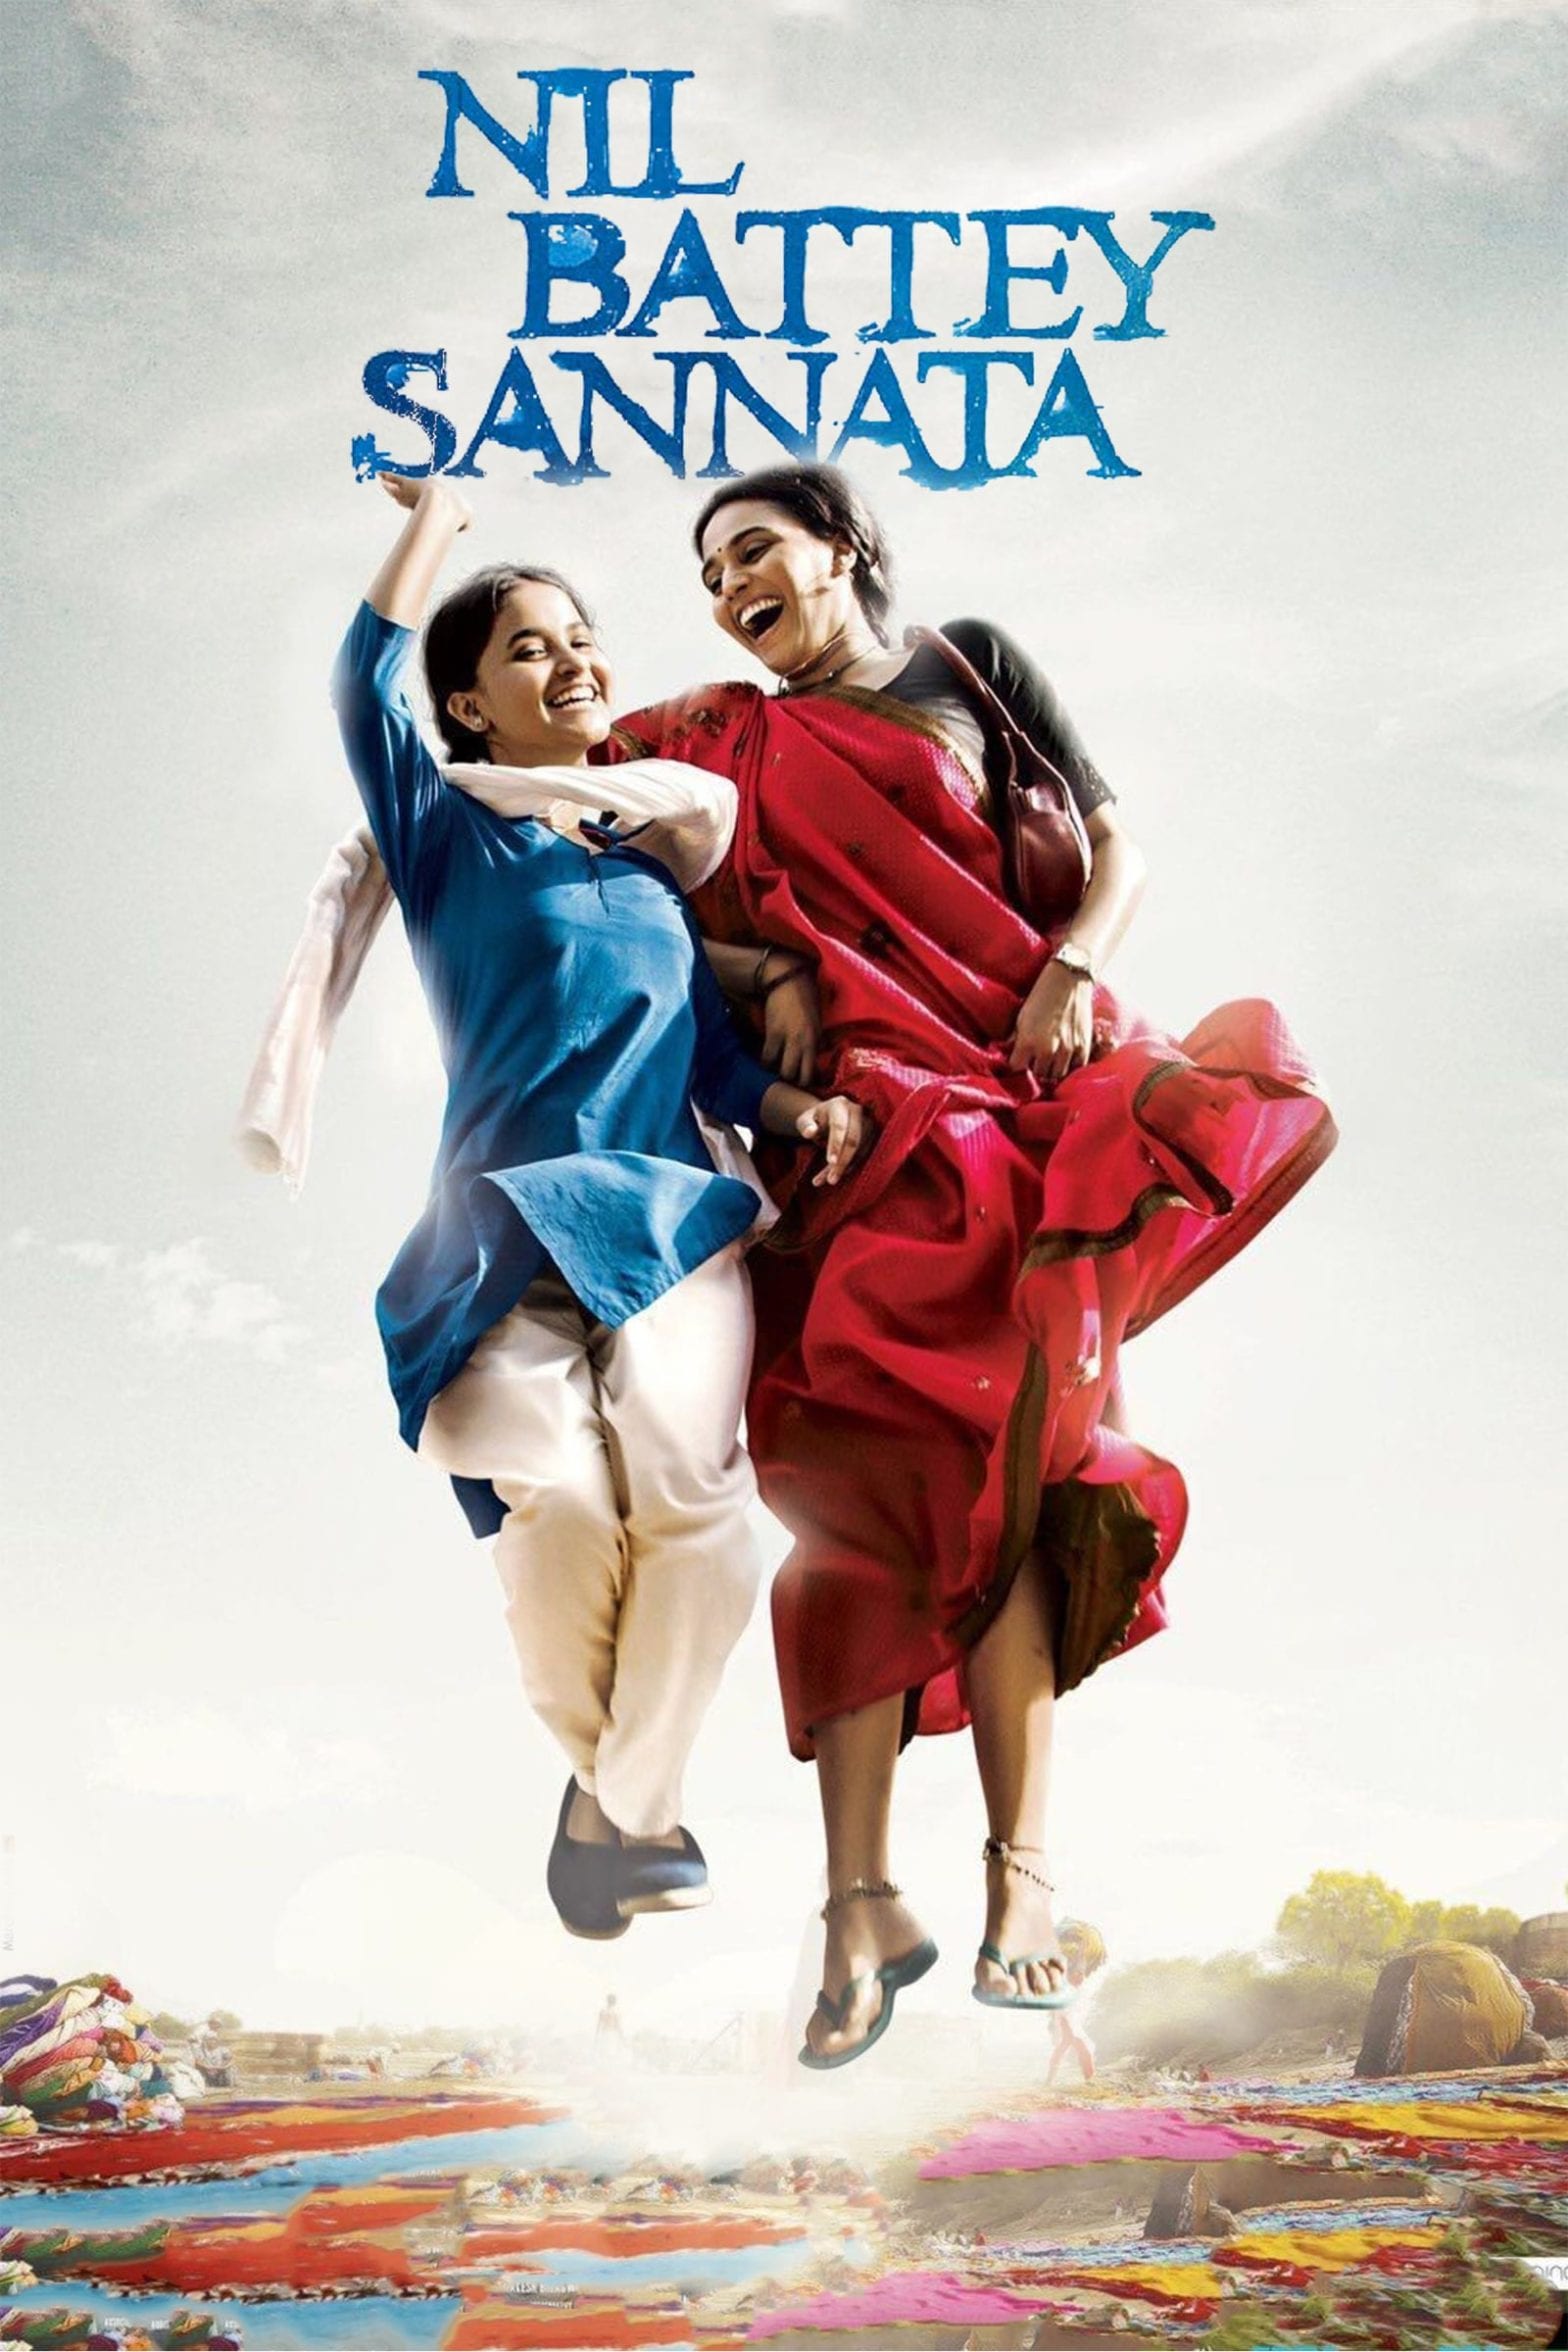 Poster for the movie "Nil Battey Sannata"